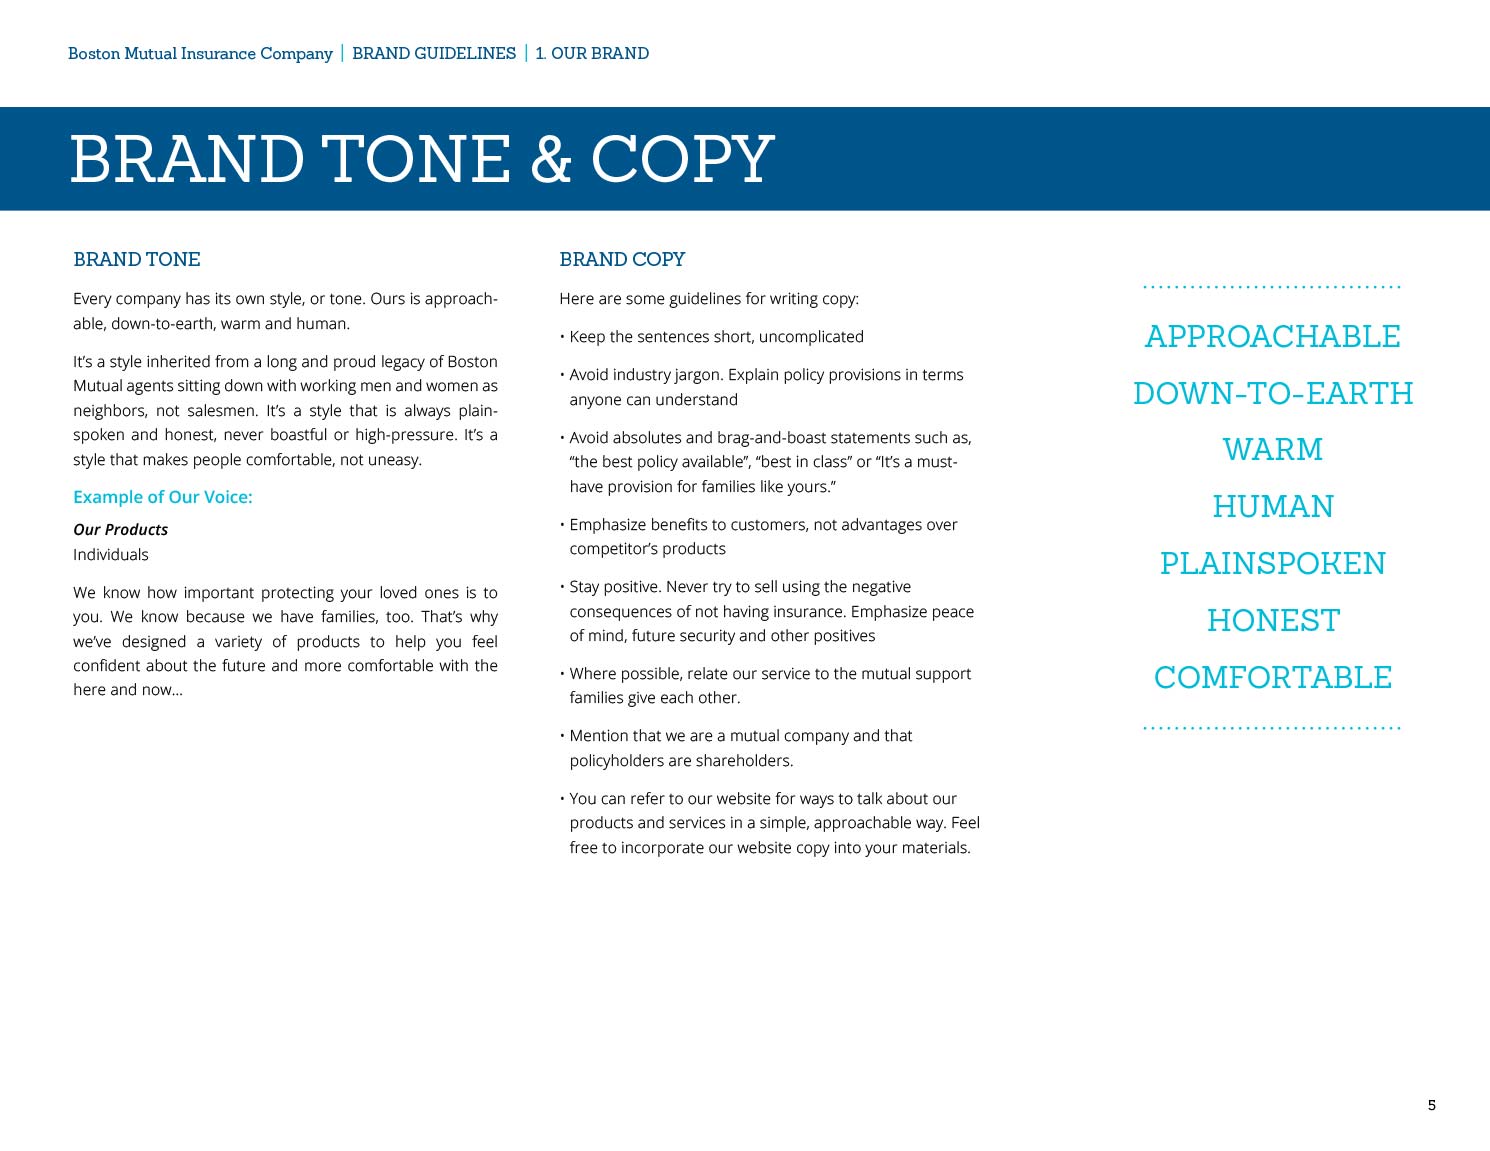 boston mutual brand guide page showing brand tone & copy